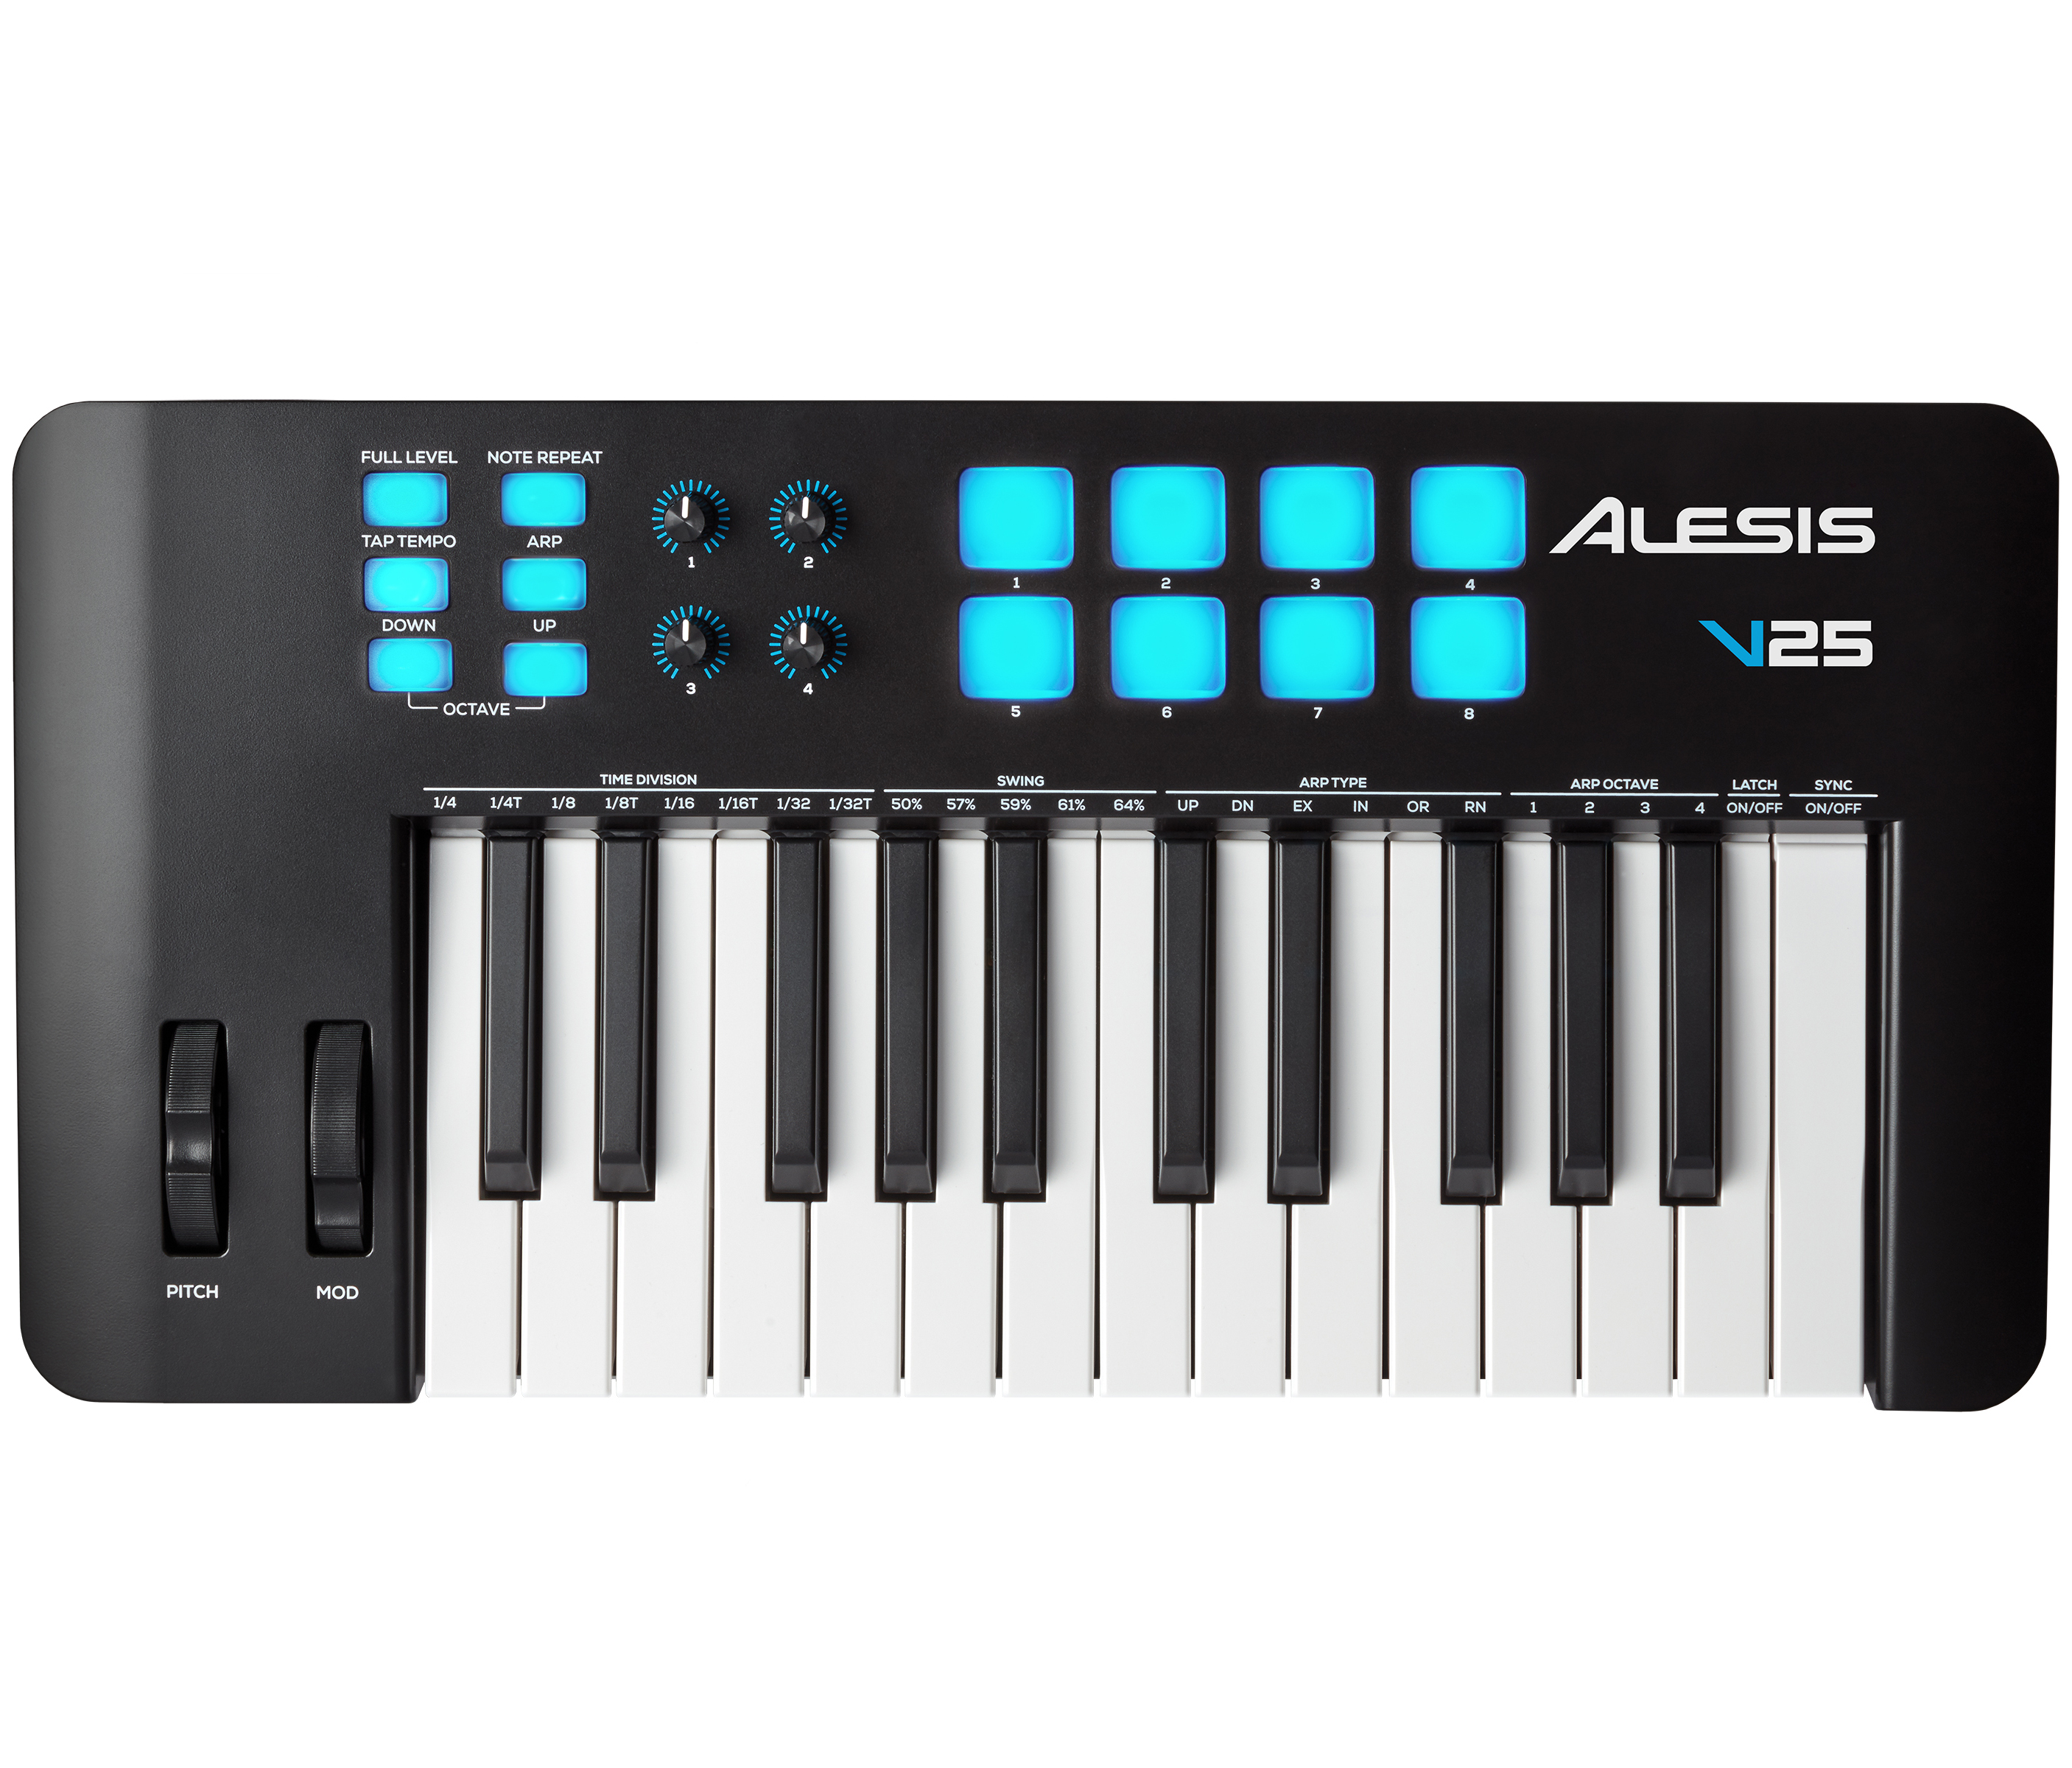 Køb Alesis v25 MKII MIDI keyboard - Pris 695.00 kr.